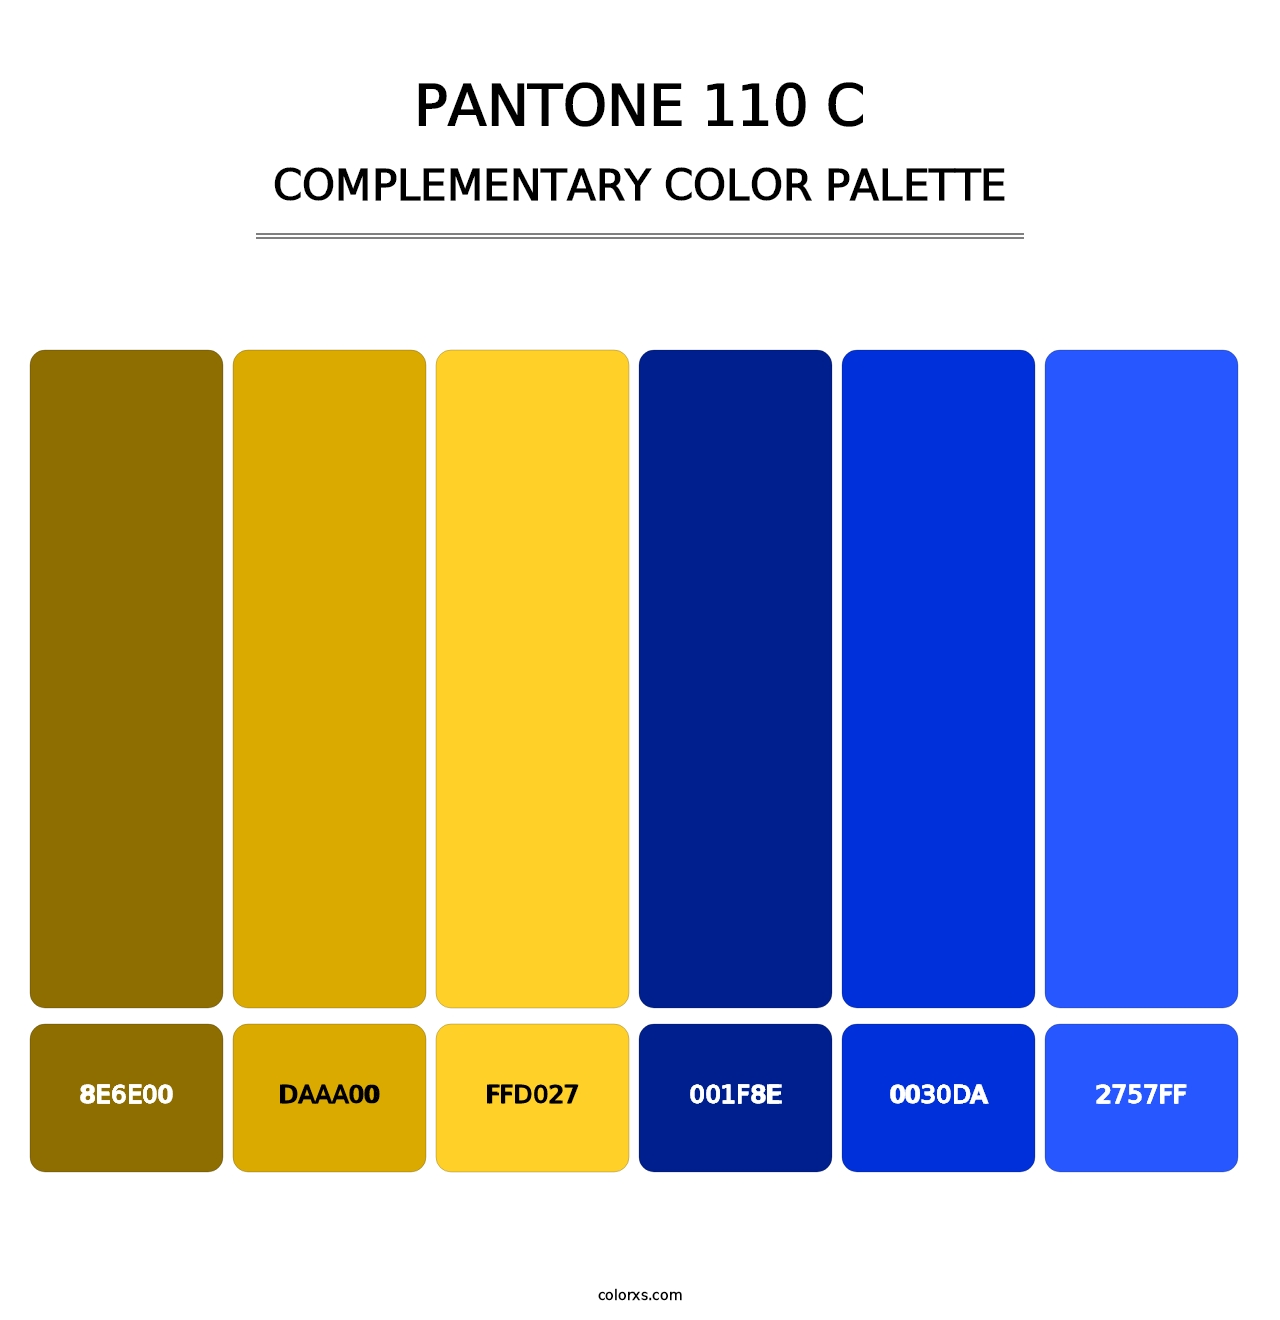 PANTONE 110 C - Complementary Color Palette